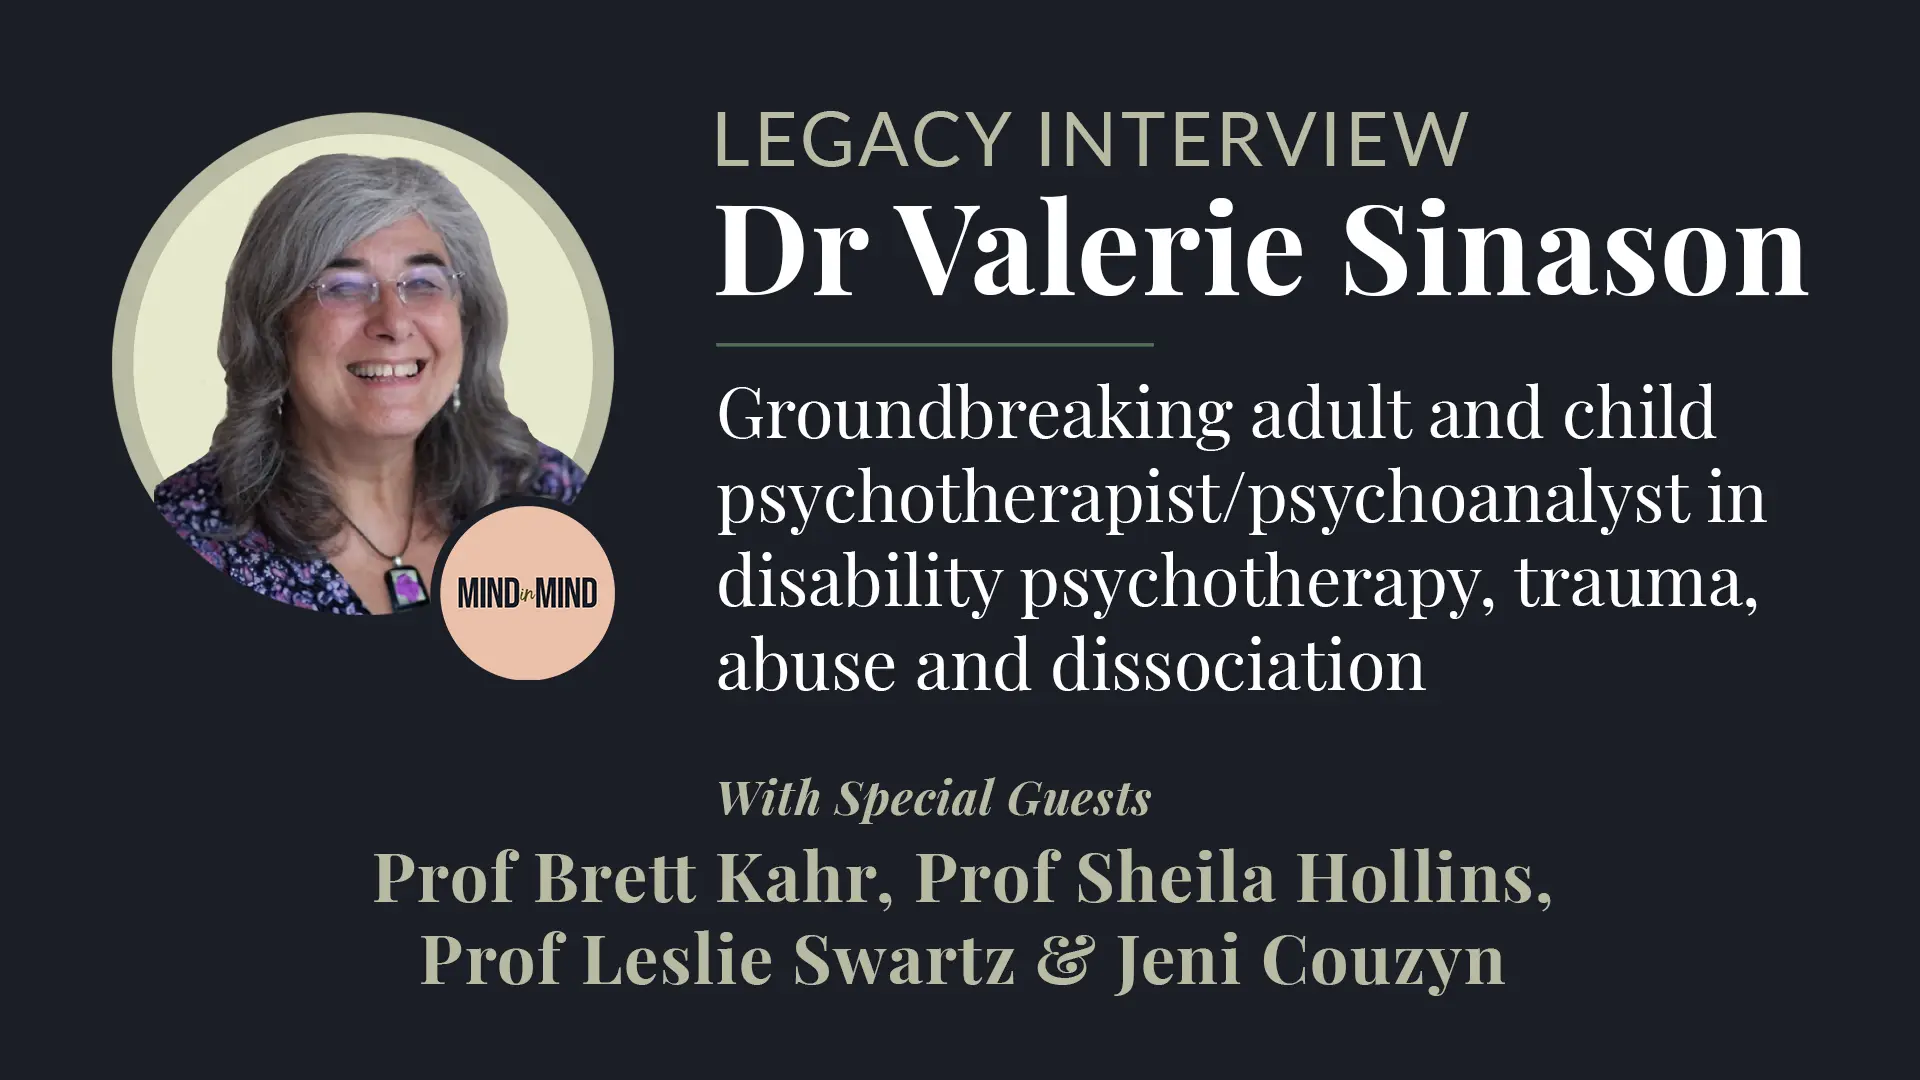 Dr Valerie Sinason Legacy Interview recording details